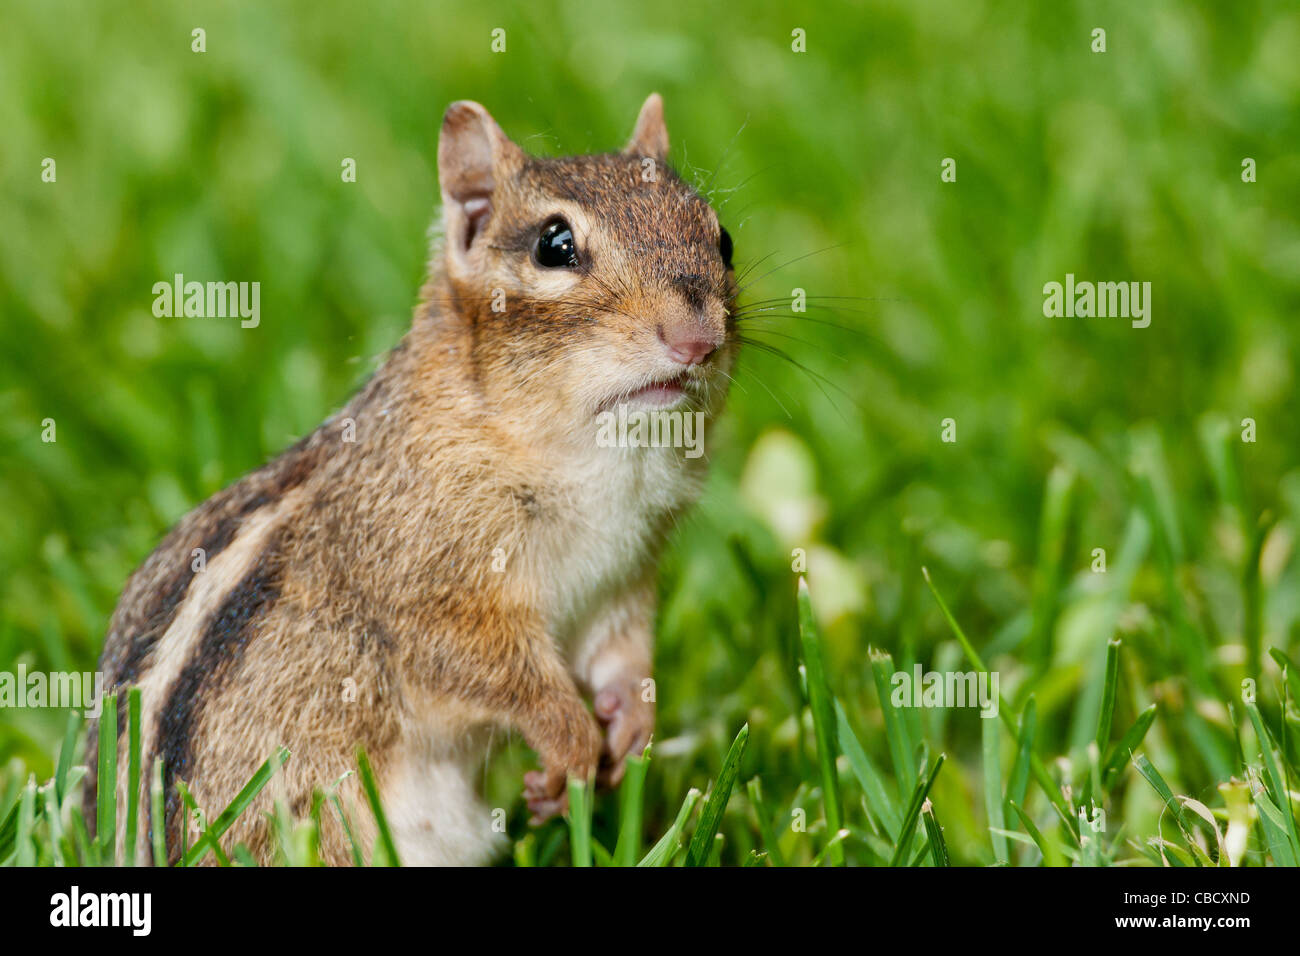 Eastern Chipmunk foraging in grassy field. Stock Photo